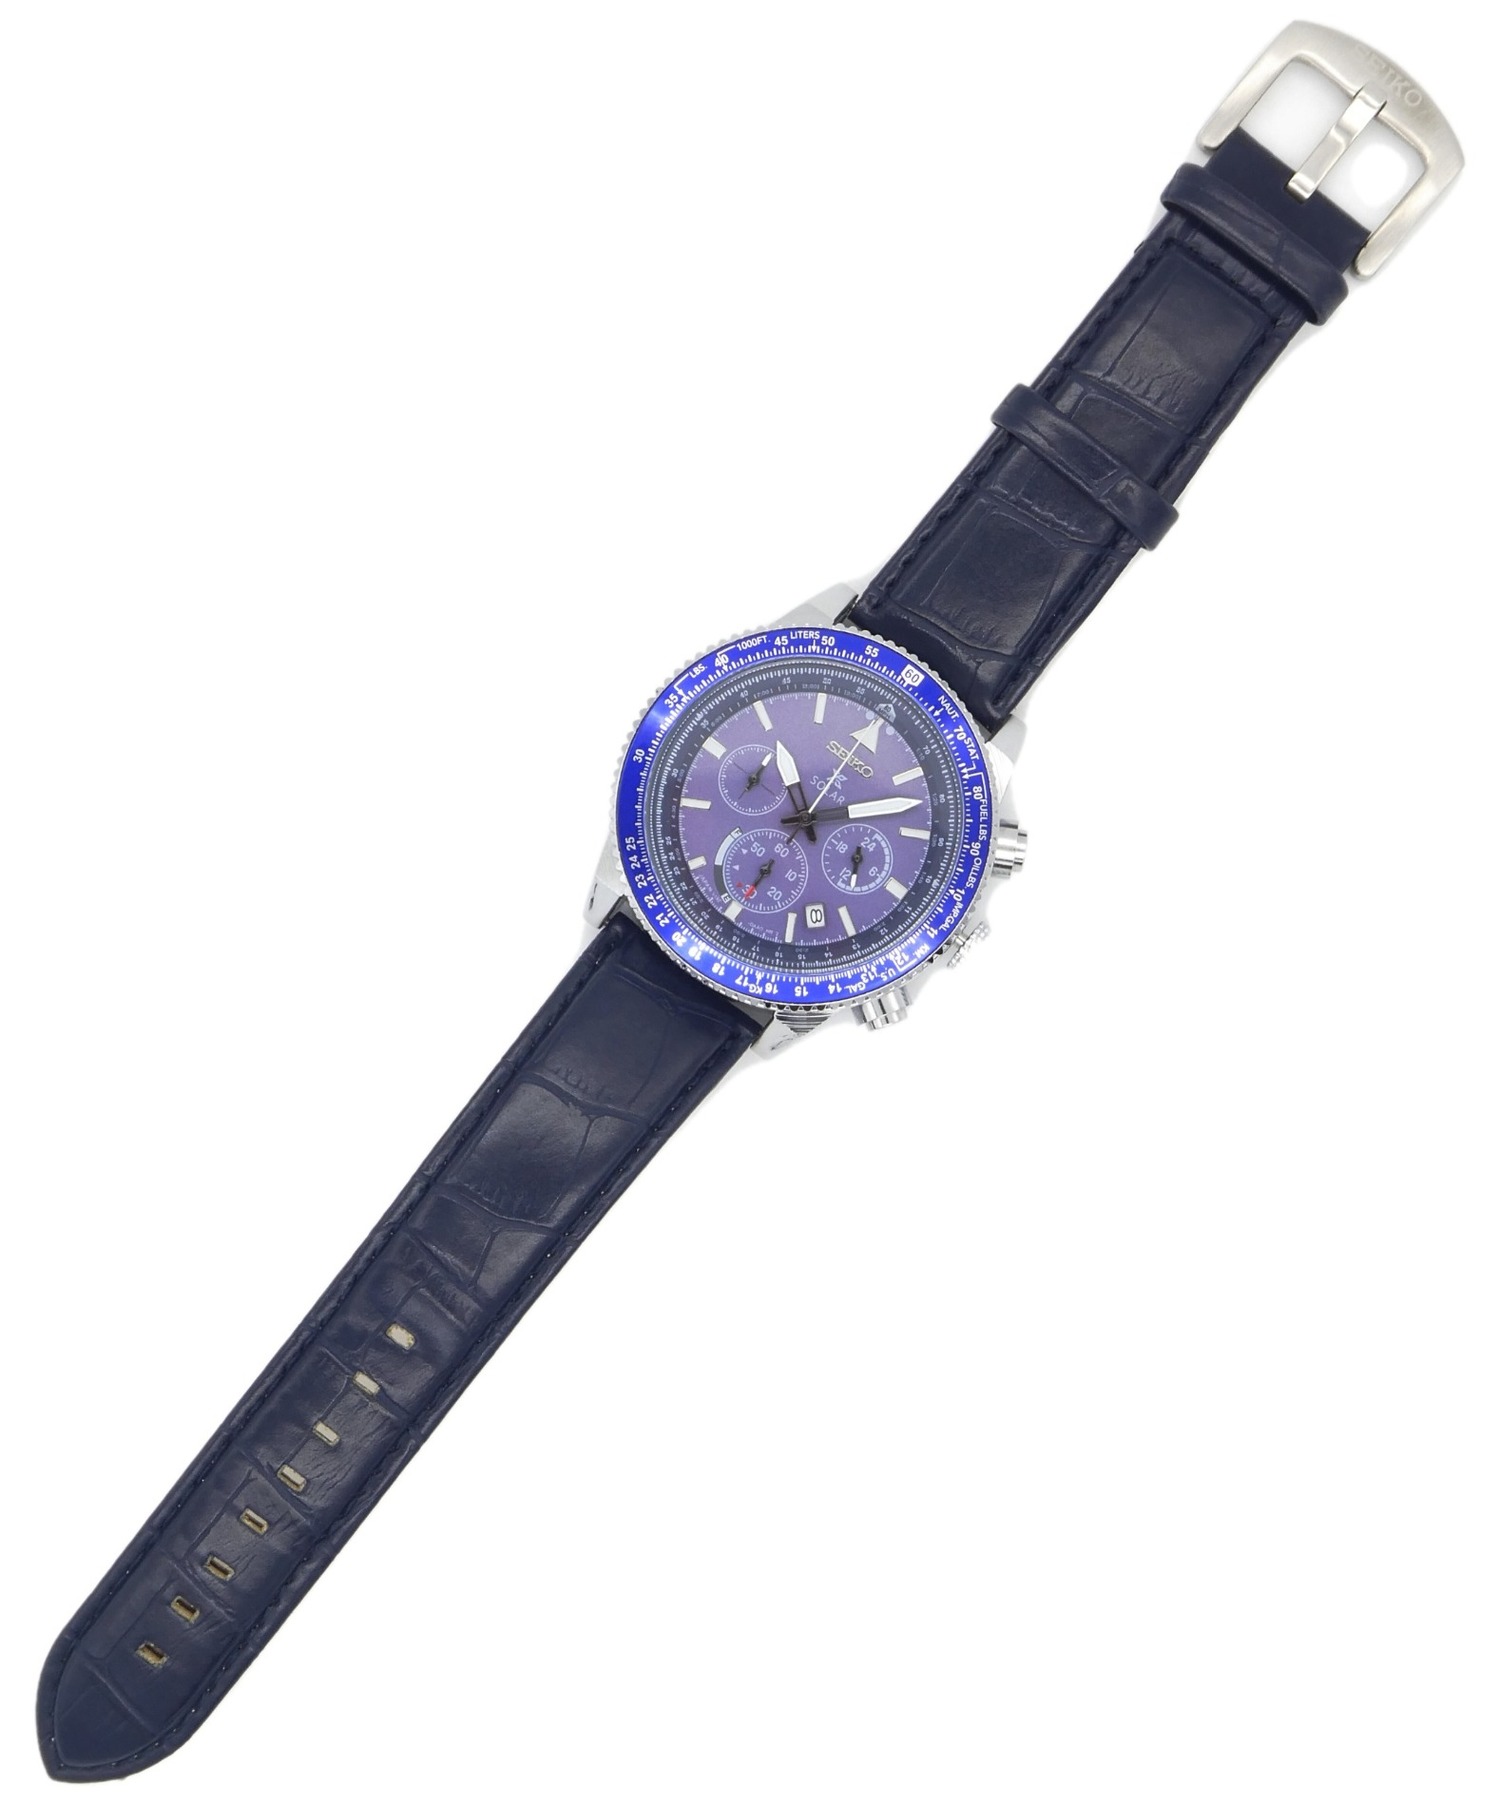 SEIKO (セイコー) Prospex Sky パイロットウォッチ 腕時計 逆輸入品 サイズ:3.5cm